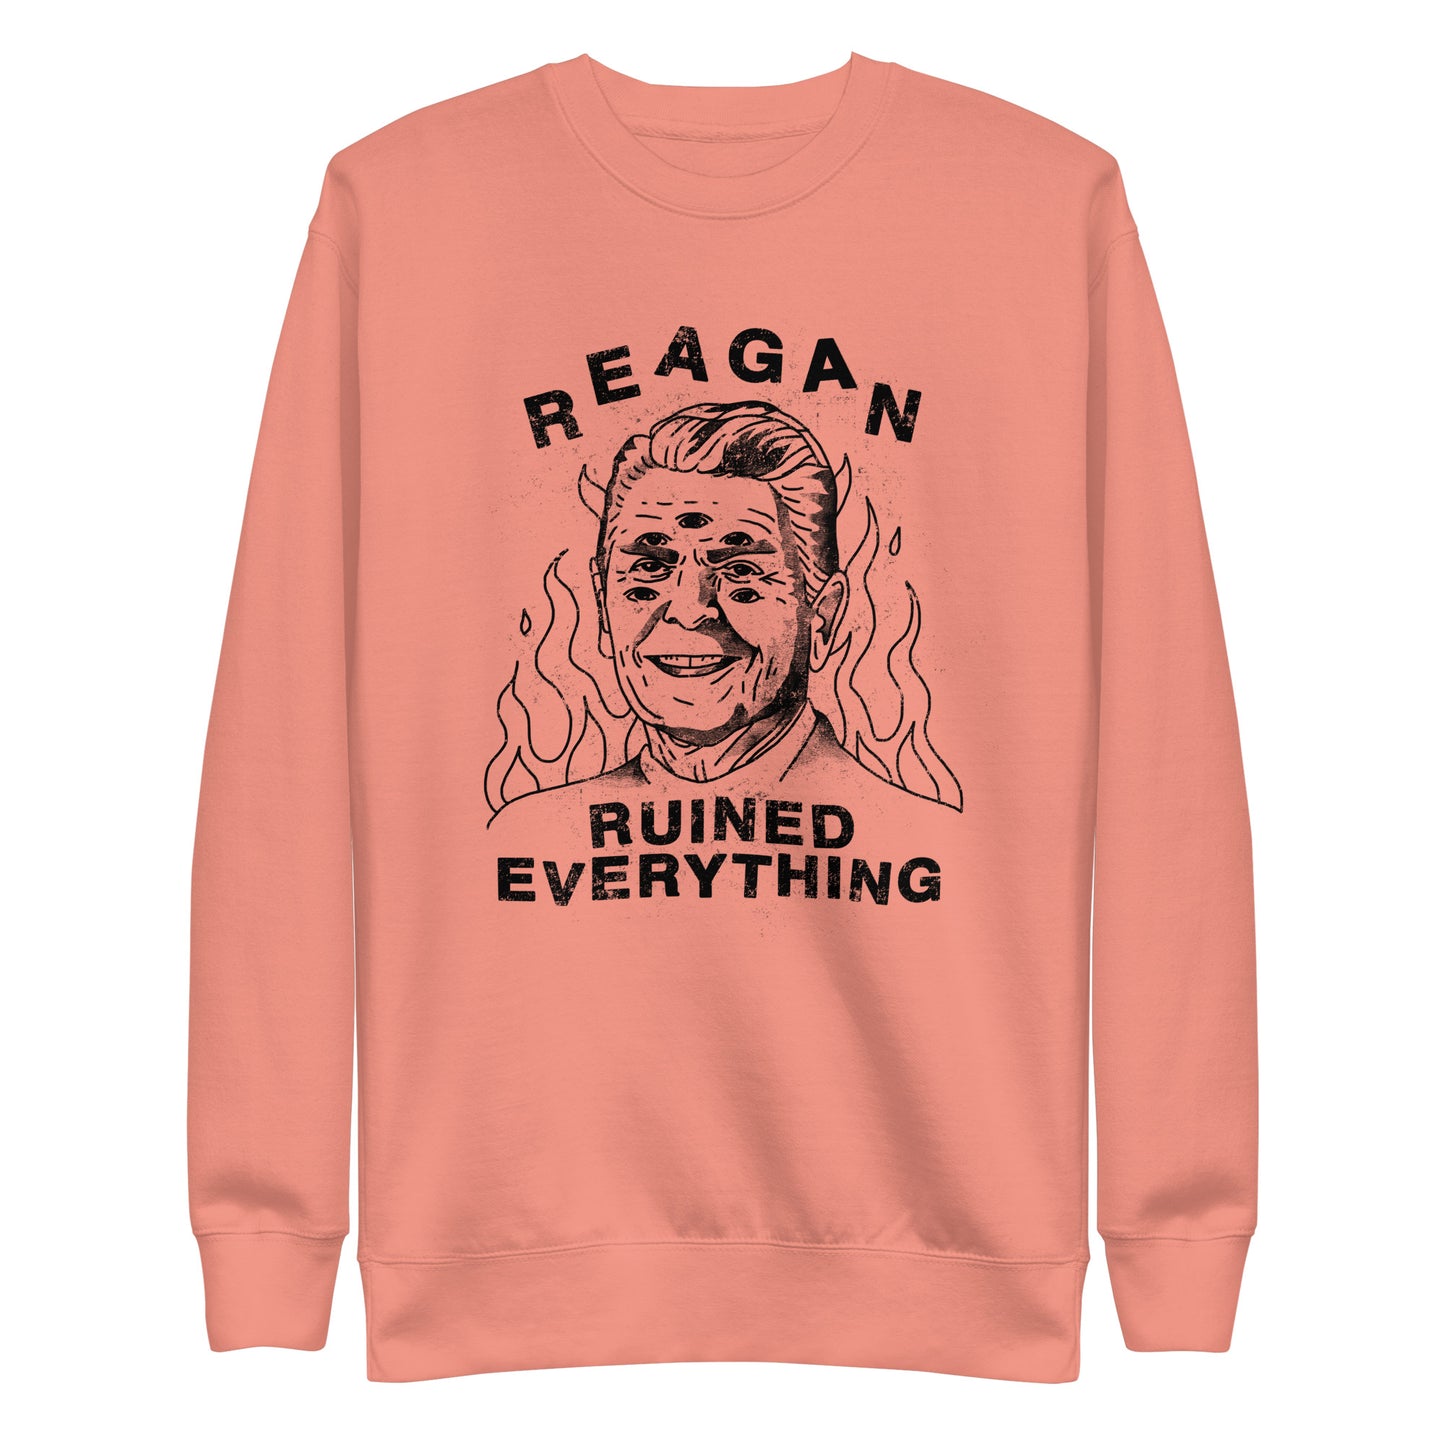 Reagan Ruined Everything! Sweatshirt